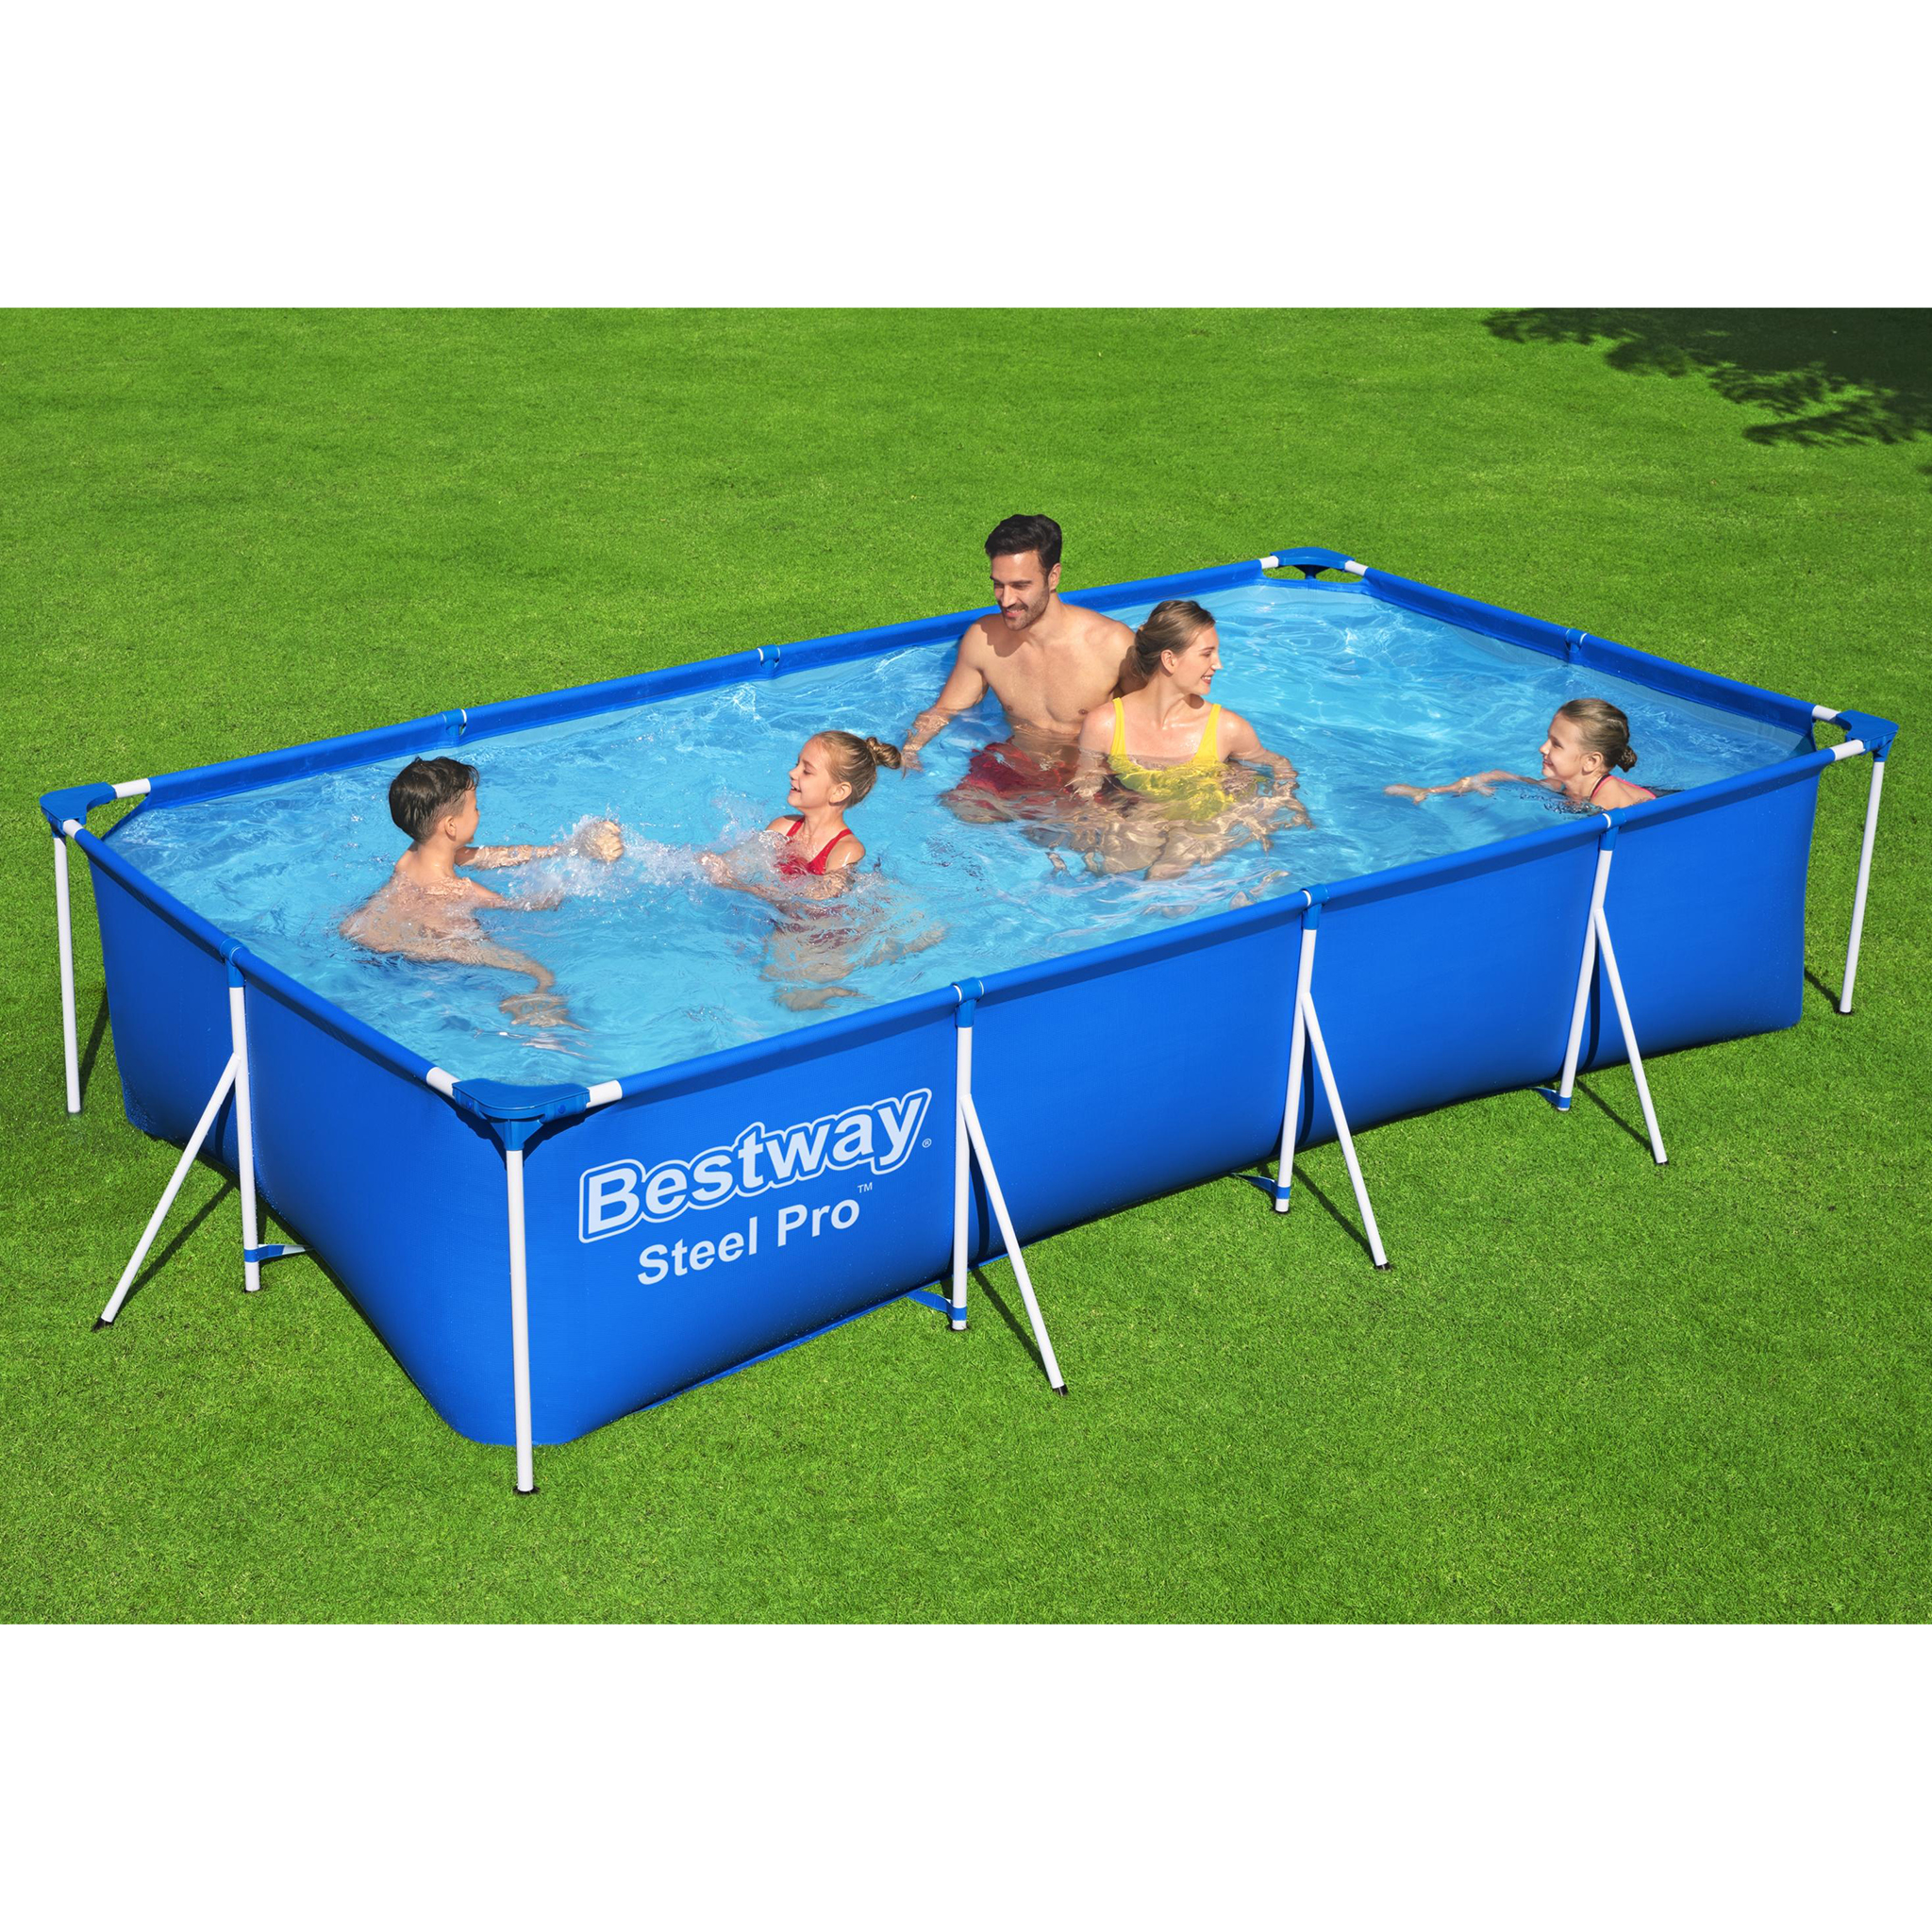 Bestway Pool ovan mark 4x2m - 81cm djup | Steel Pro (56405)